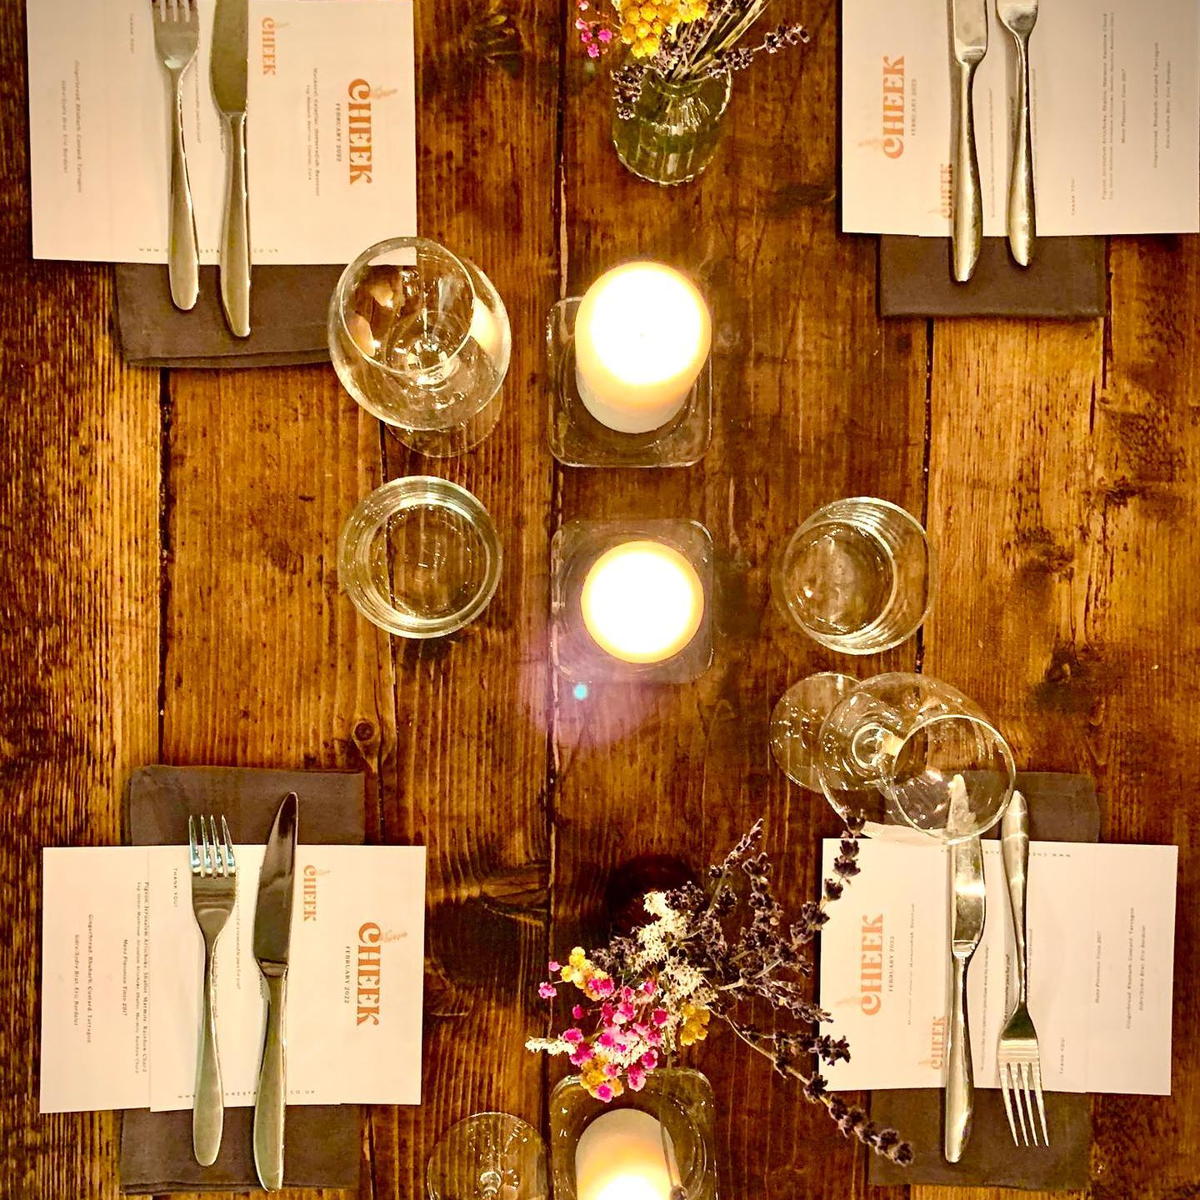 'CHEEK' Modern British Supper Club with Wine Pairing